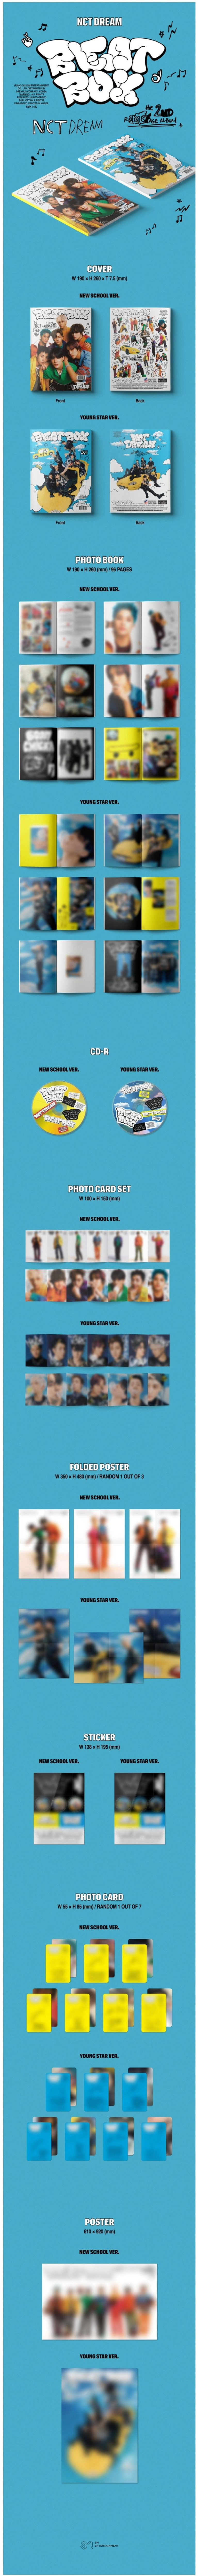 Korea Pop Store NCT DREAM - VOL.2 REPACKAGE 'BEATBOX' PHOTOBOOK VER. Kawaii Gifts 8809755508890